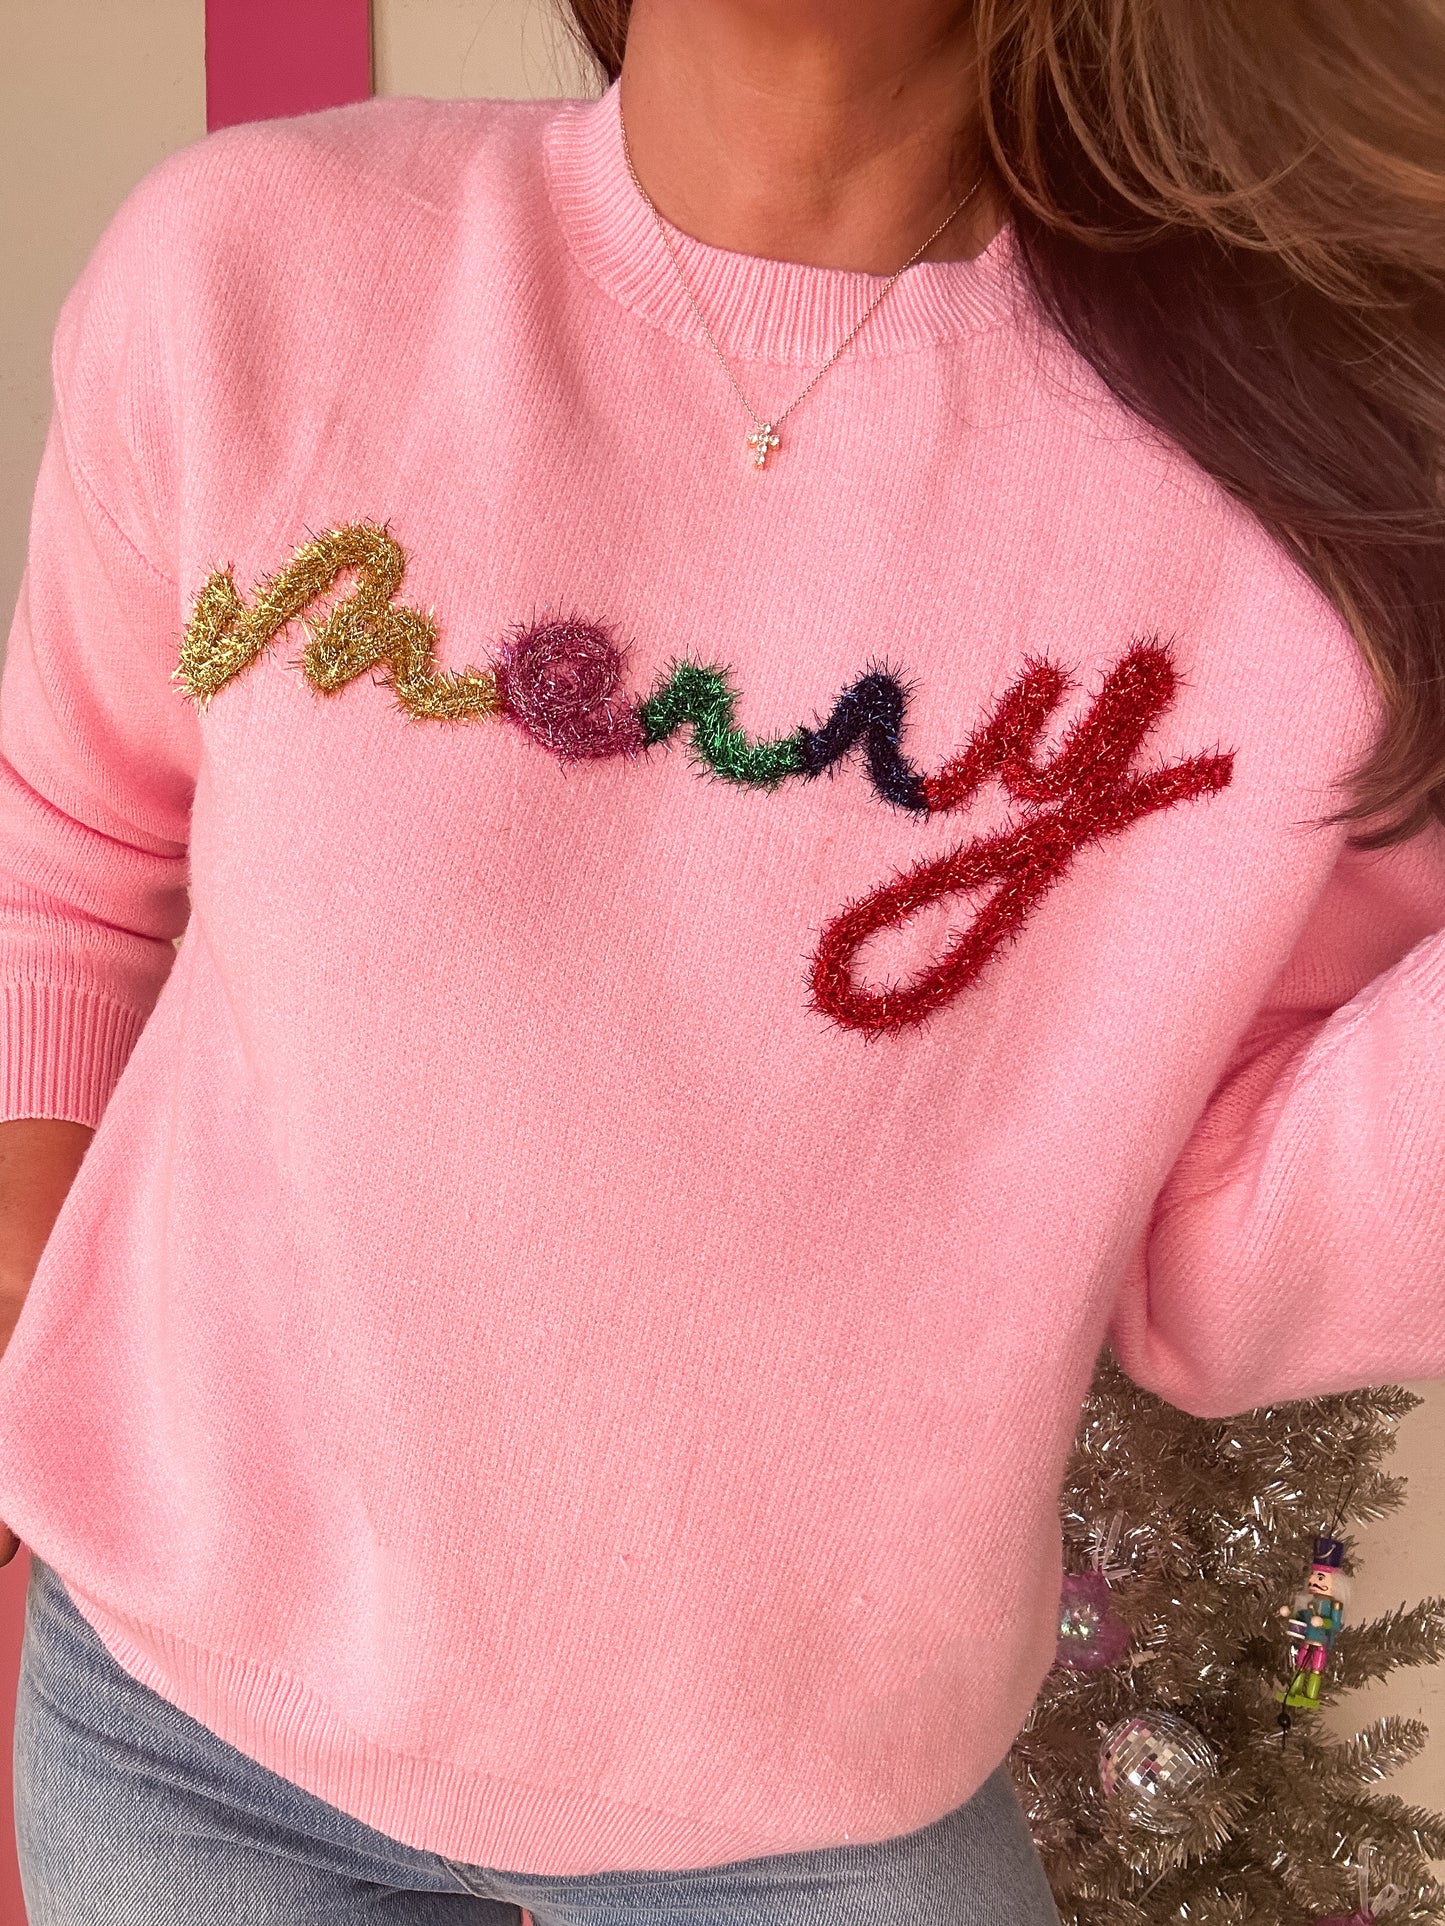 Merry Pinkmas Sweater